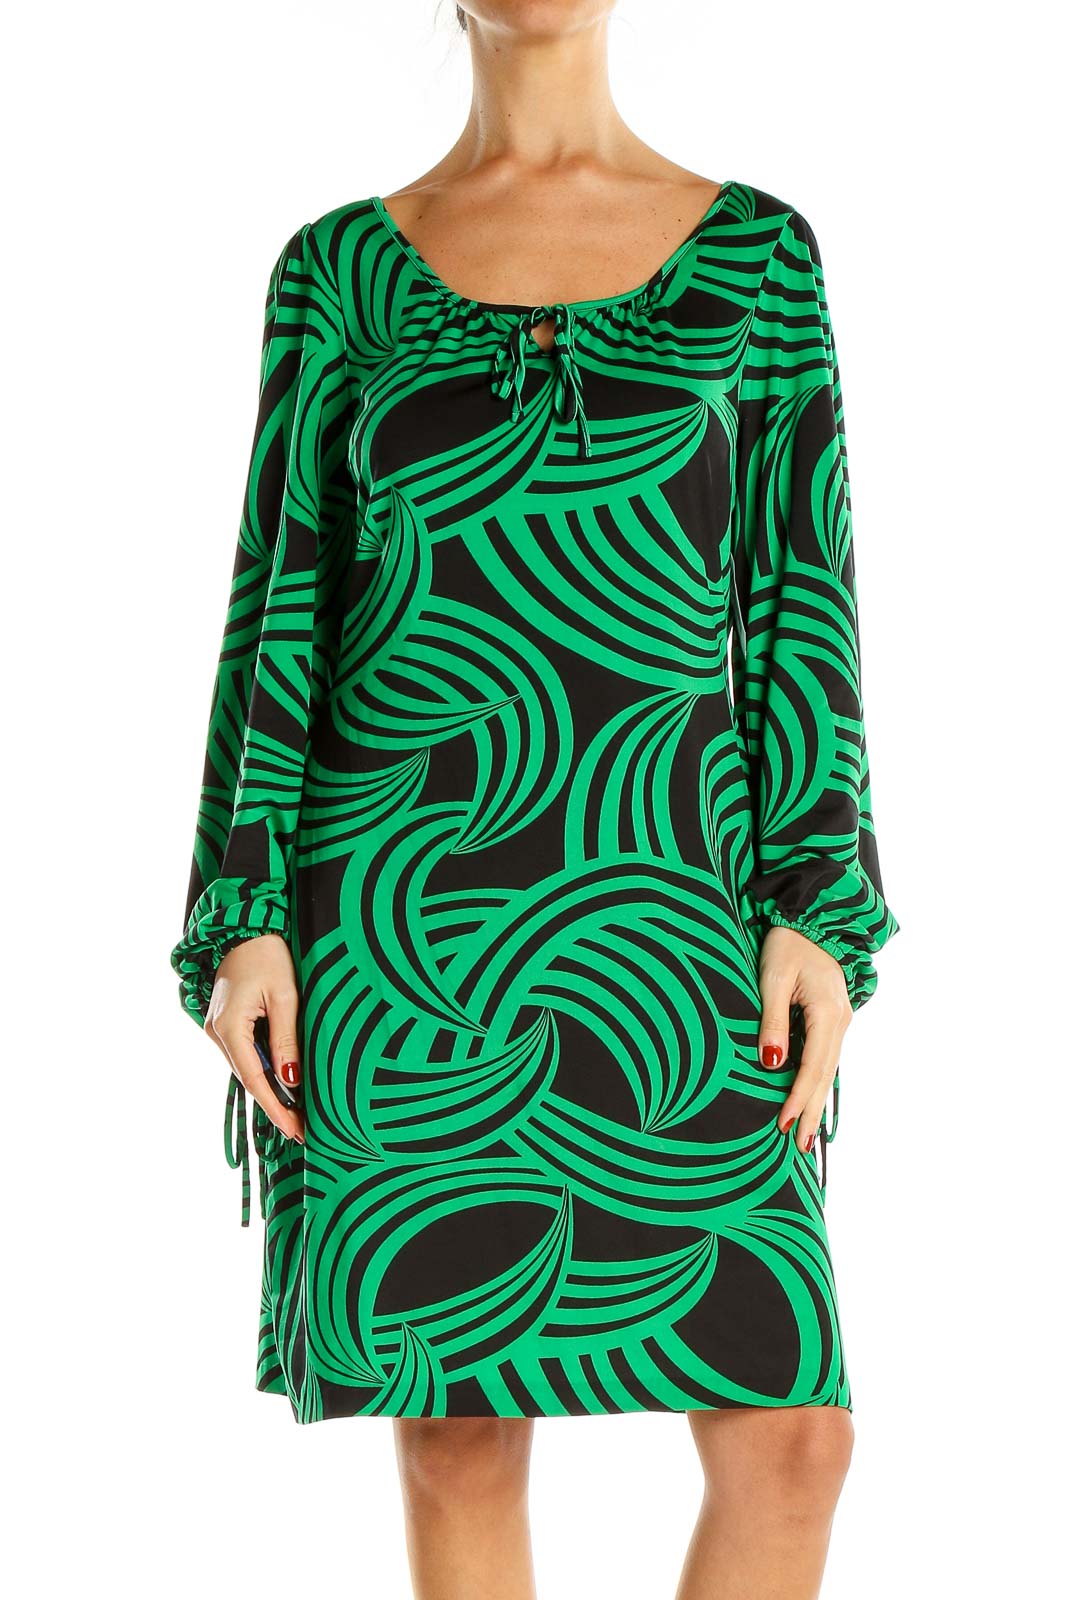 Green Black Graphic Print Retro Sheath Dress Front